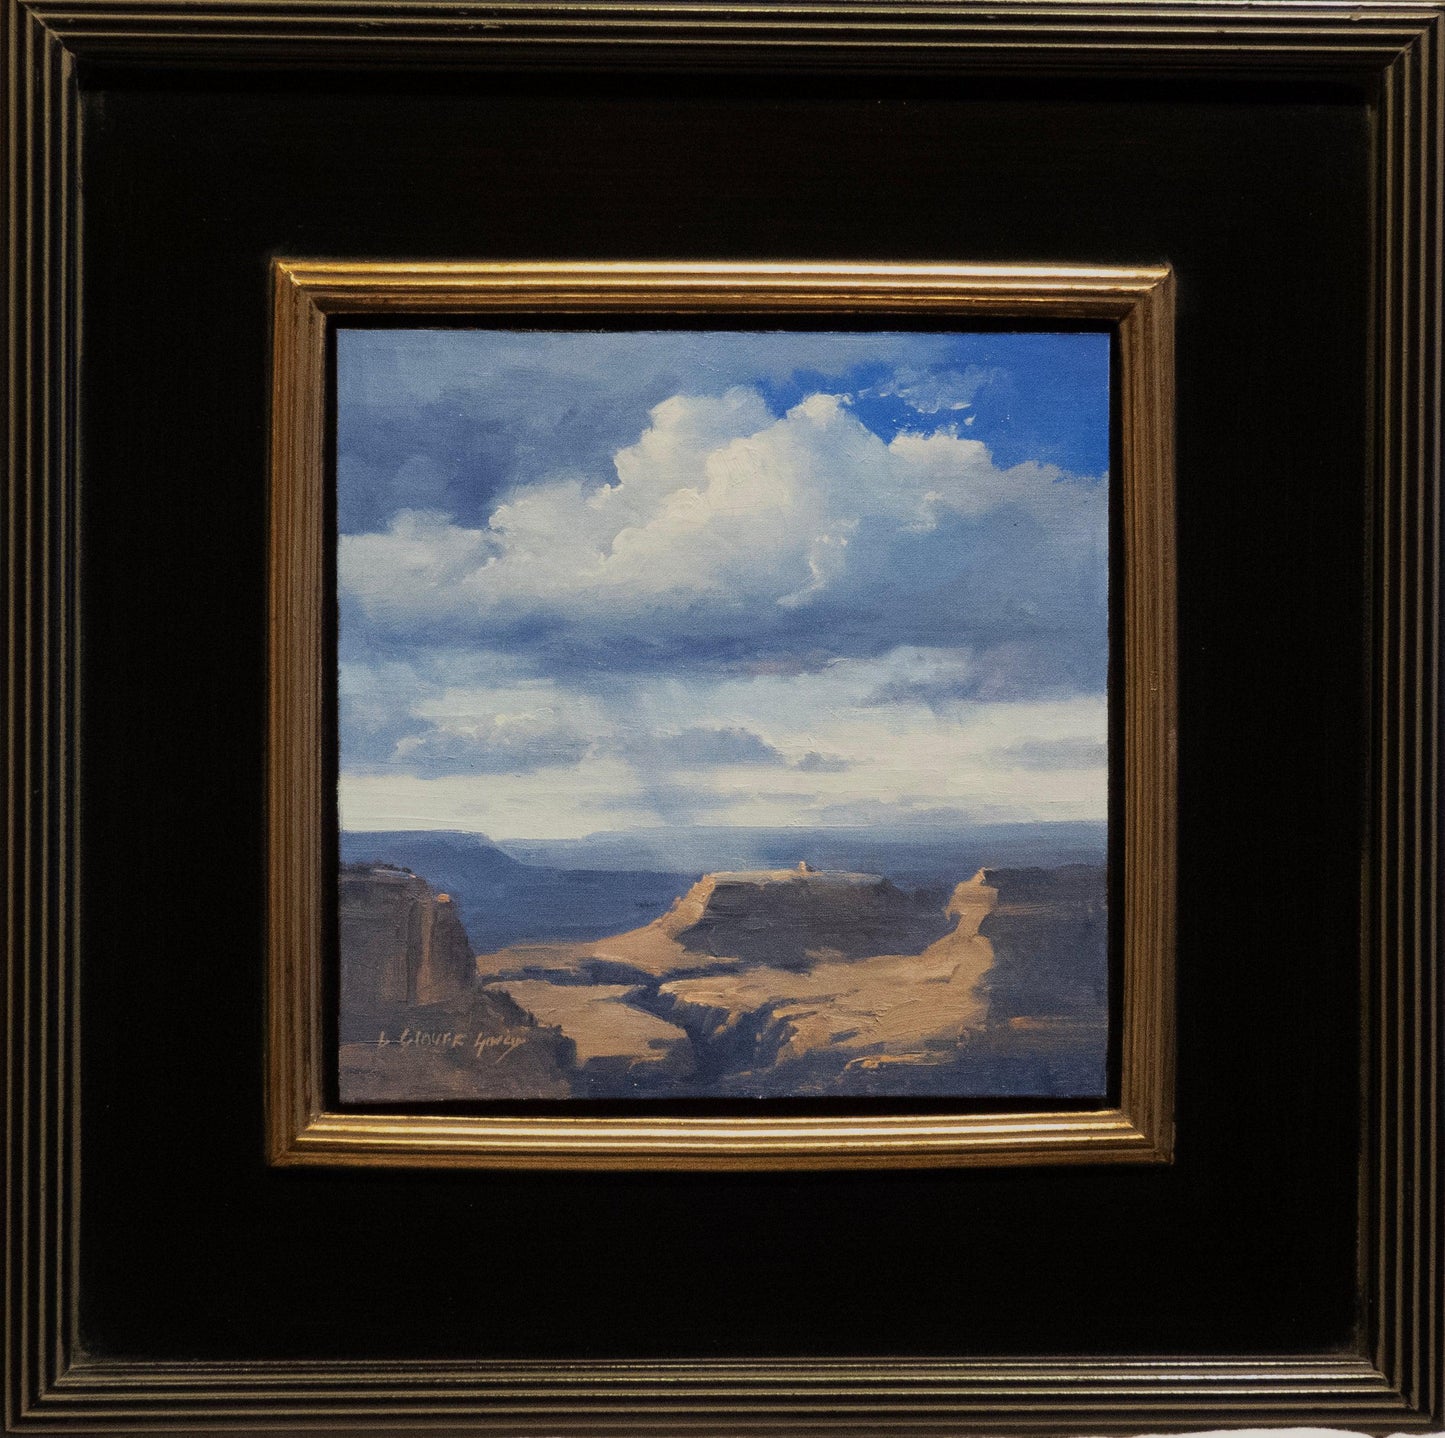 Canyon Motif-Painting-Linda Glover Gooch-Sorrel Sky Gallery